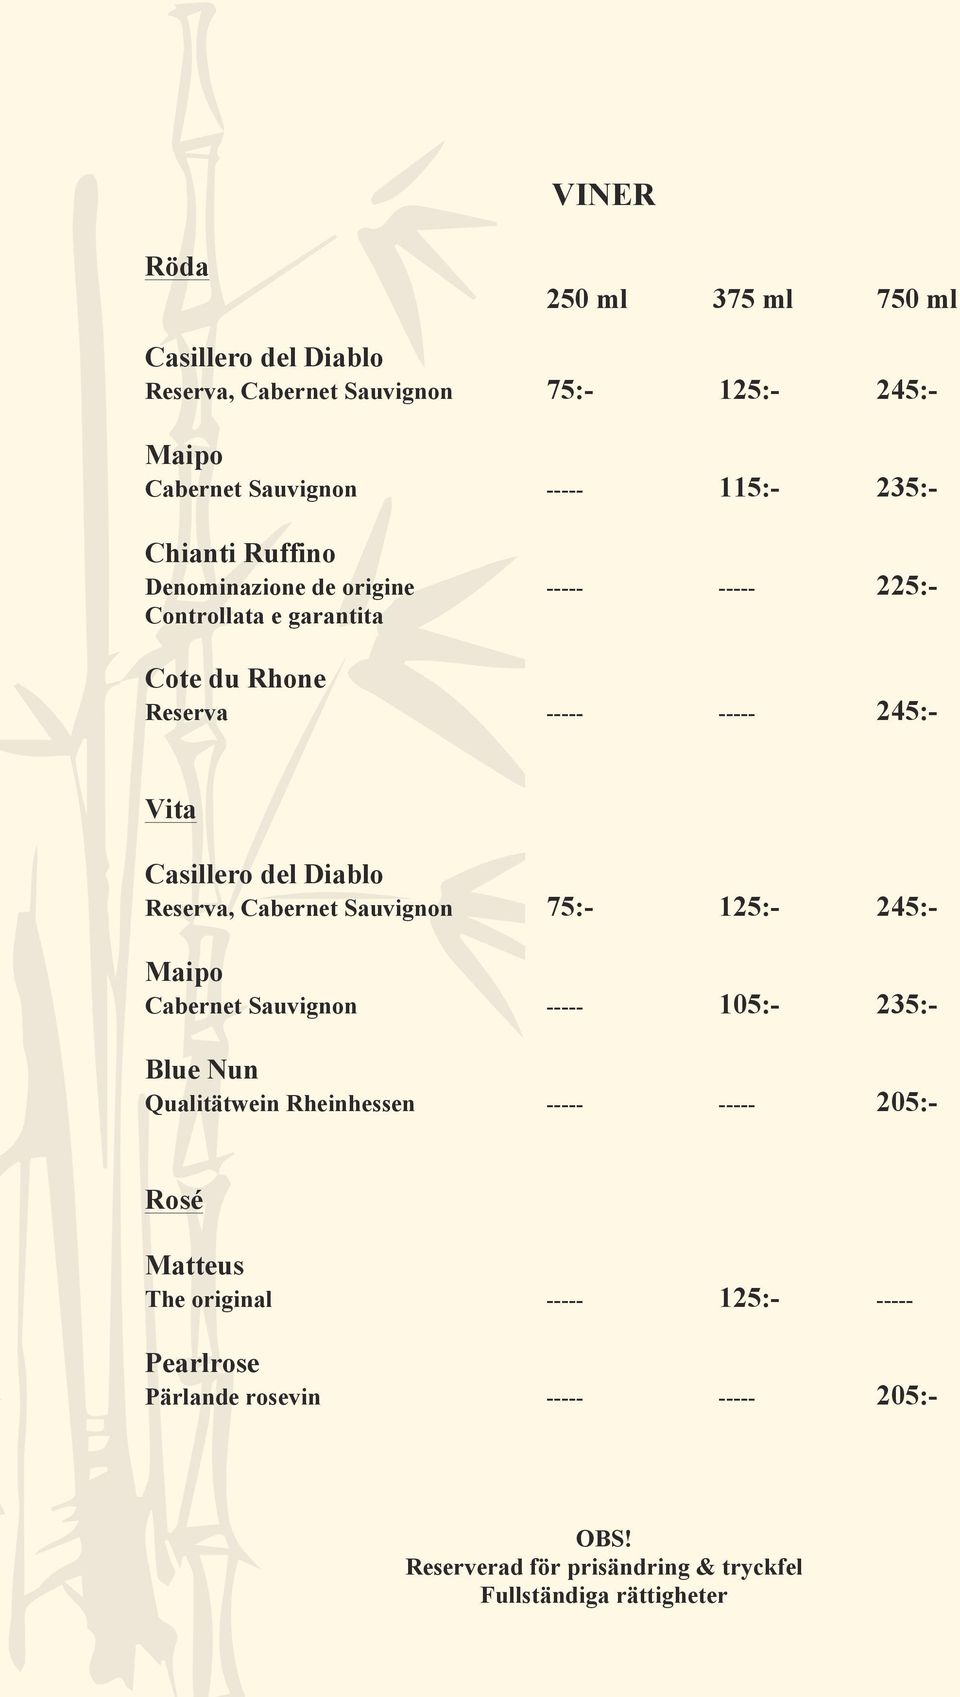 Diablo Reserva, Cabernet Sauvignon 75:- 125:- 245:- Maipo Cabernet Sauvignon ----- 105:- 235:- Blue Nun Qualitätwein Rheinhessen ----- ----- 205:-